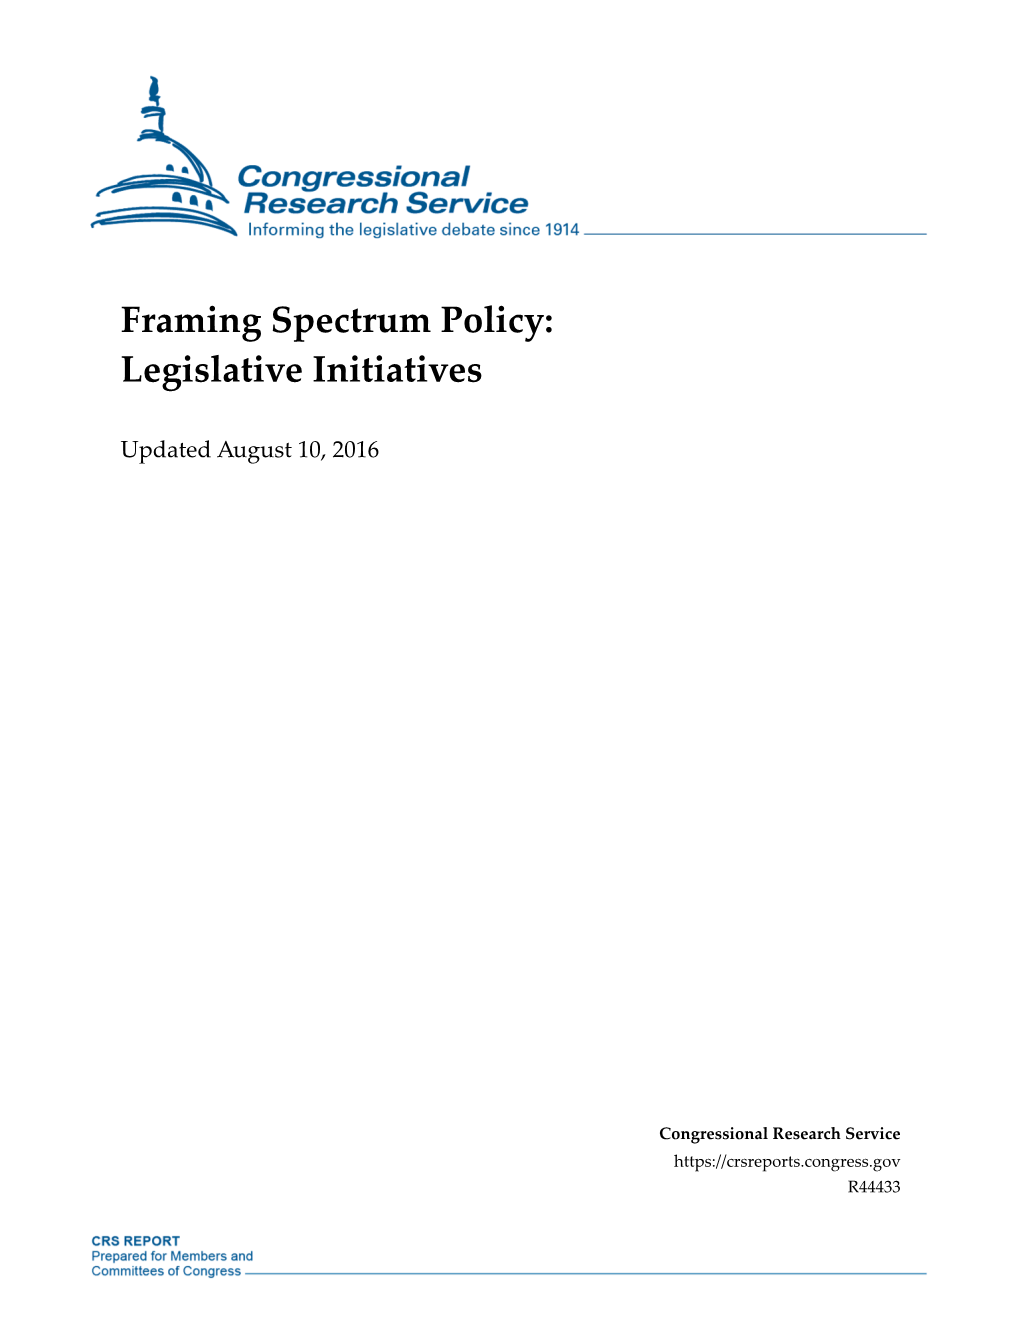 Framing Spectrum Policy: Legislative Initiatives